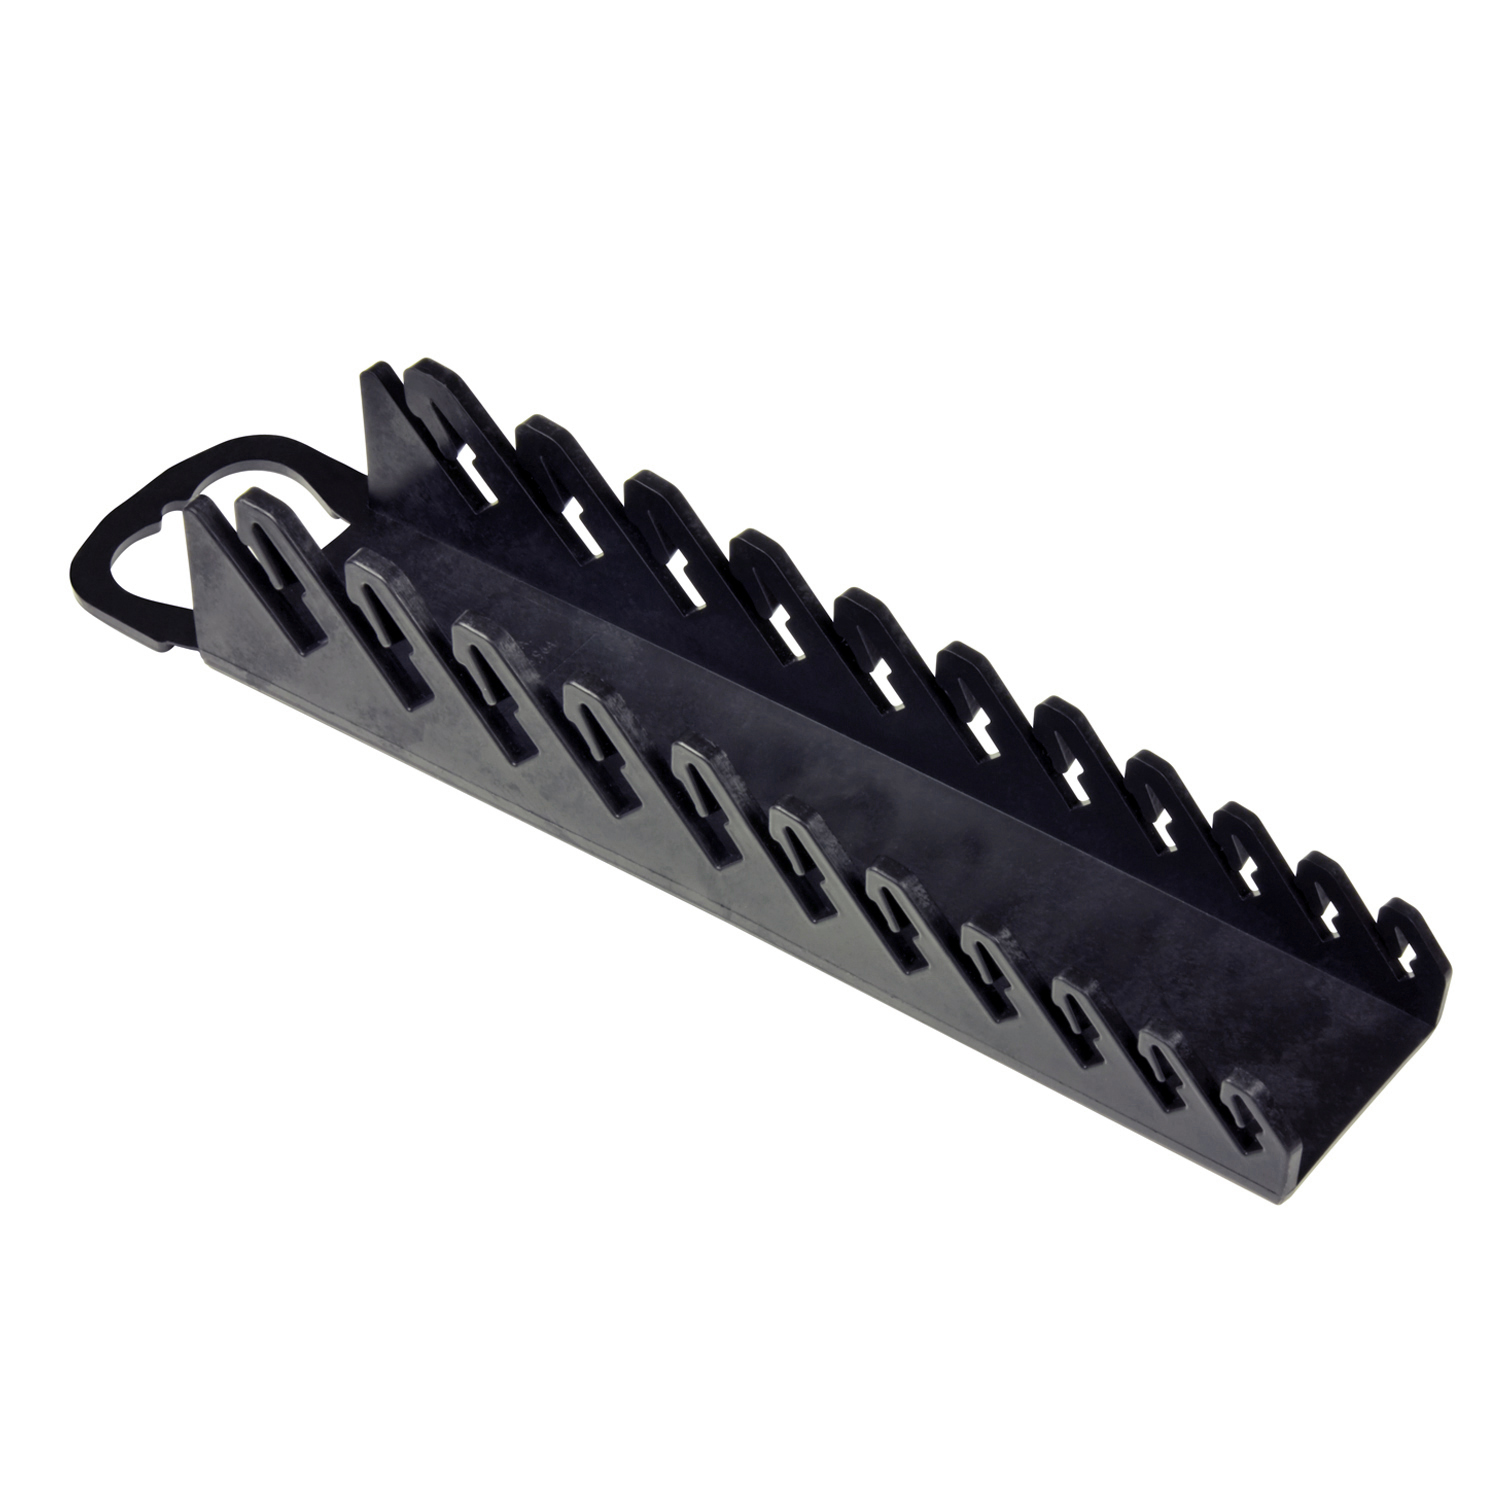 11 Tool GRIPPER Stubby Wrench Organizer-Black